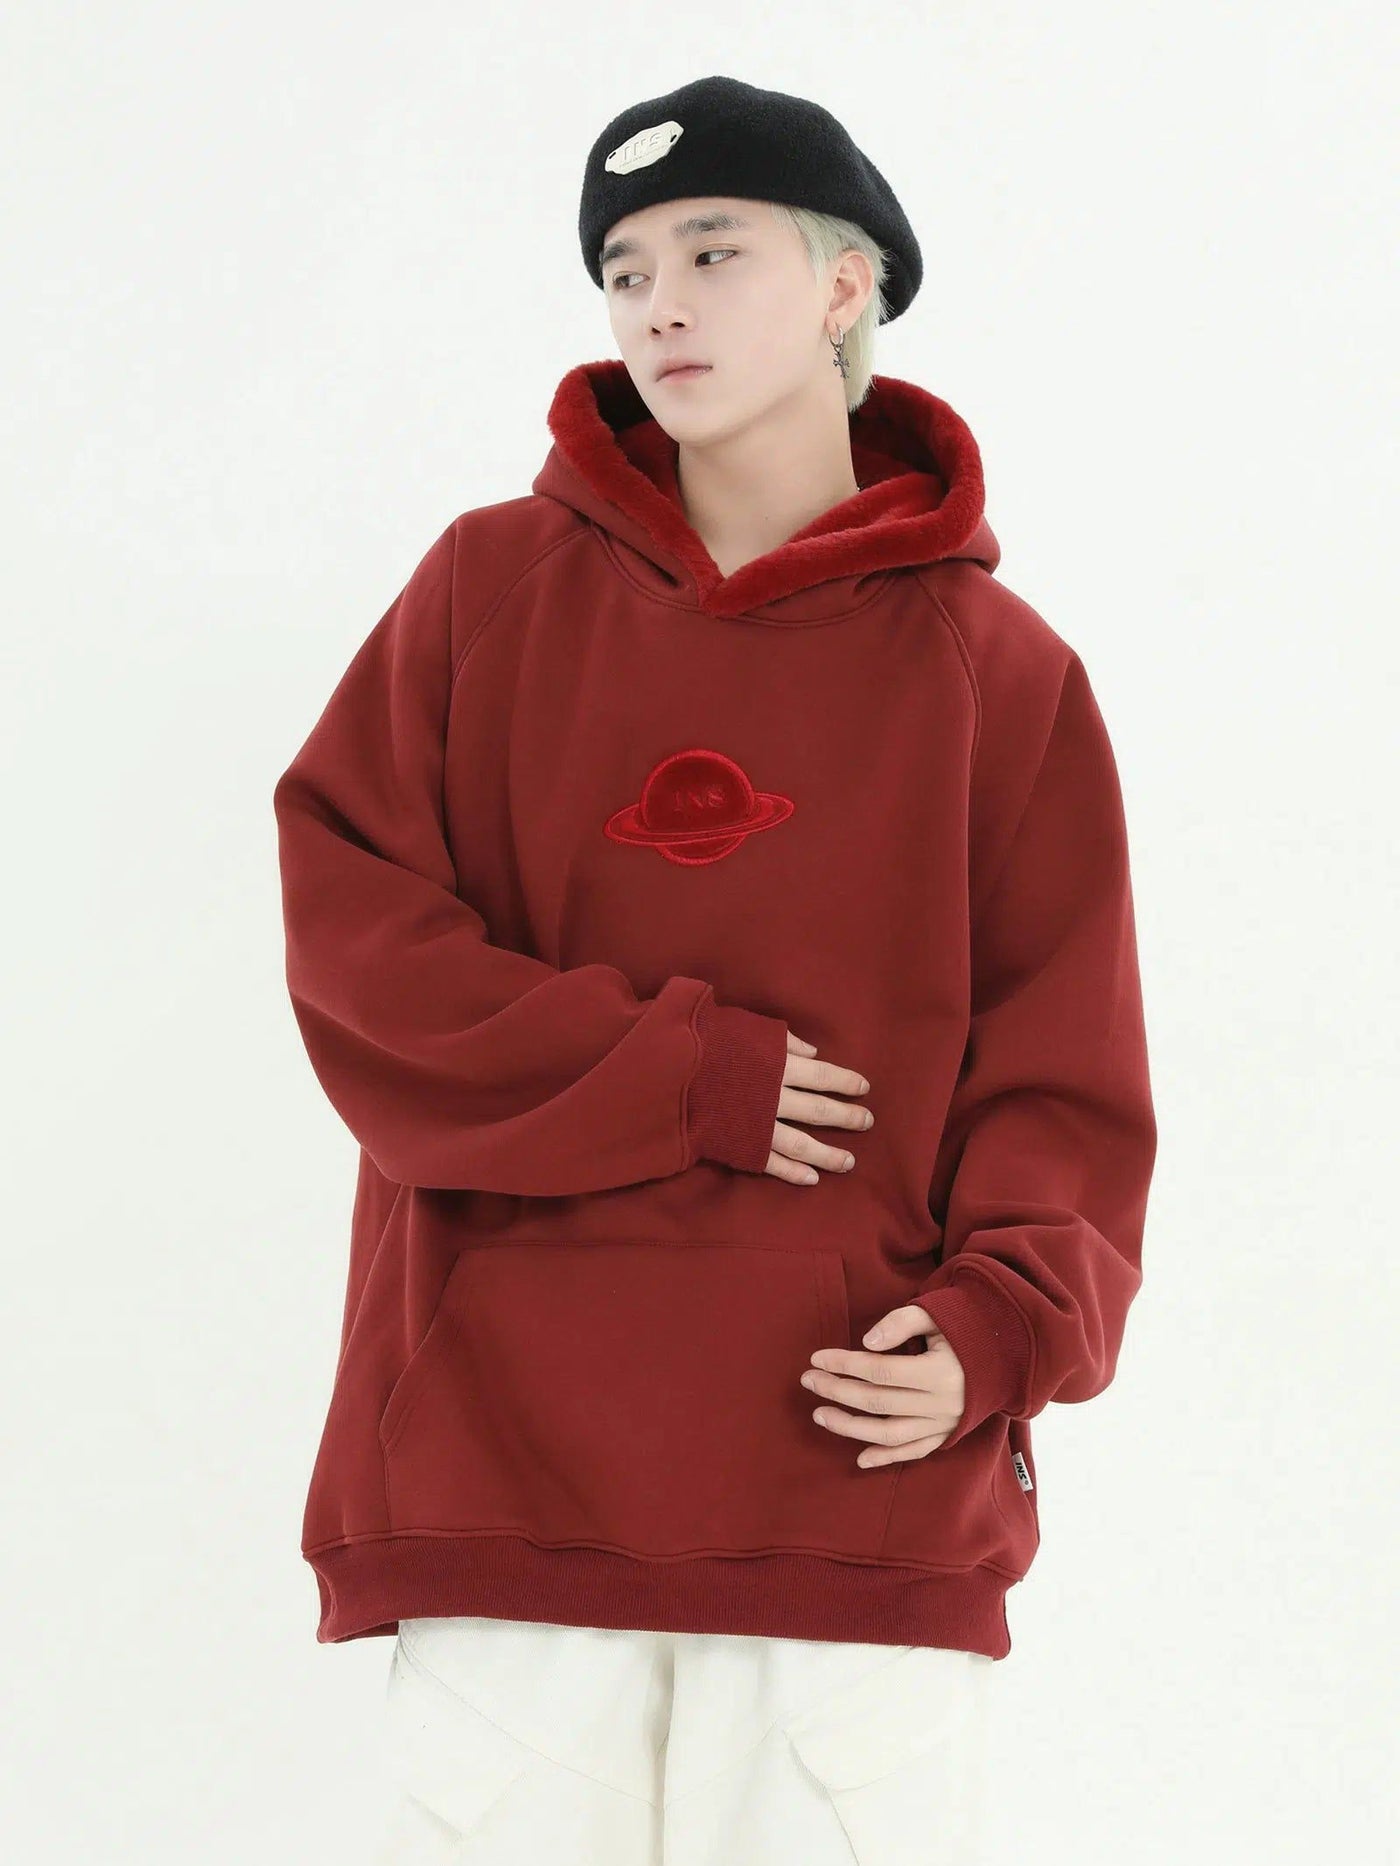 Planet Logo Hoodie Korean Street Fashion Hoodie By INS Korea Shop Online at OH Vault